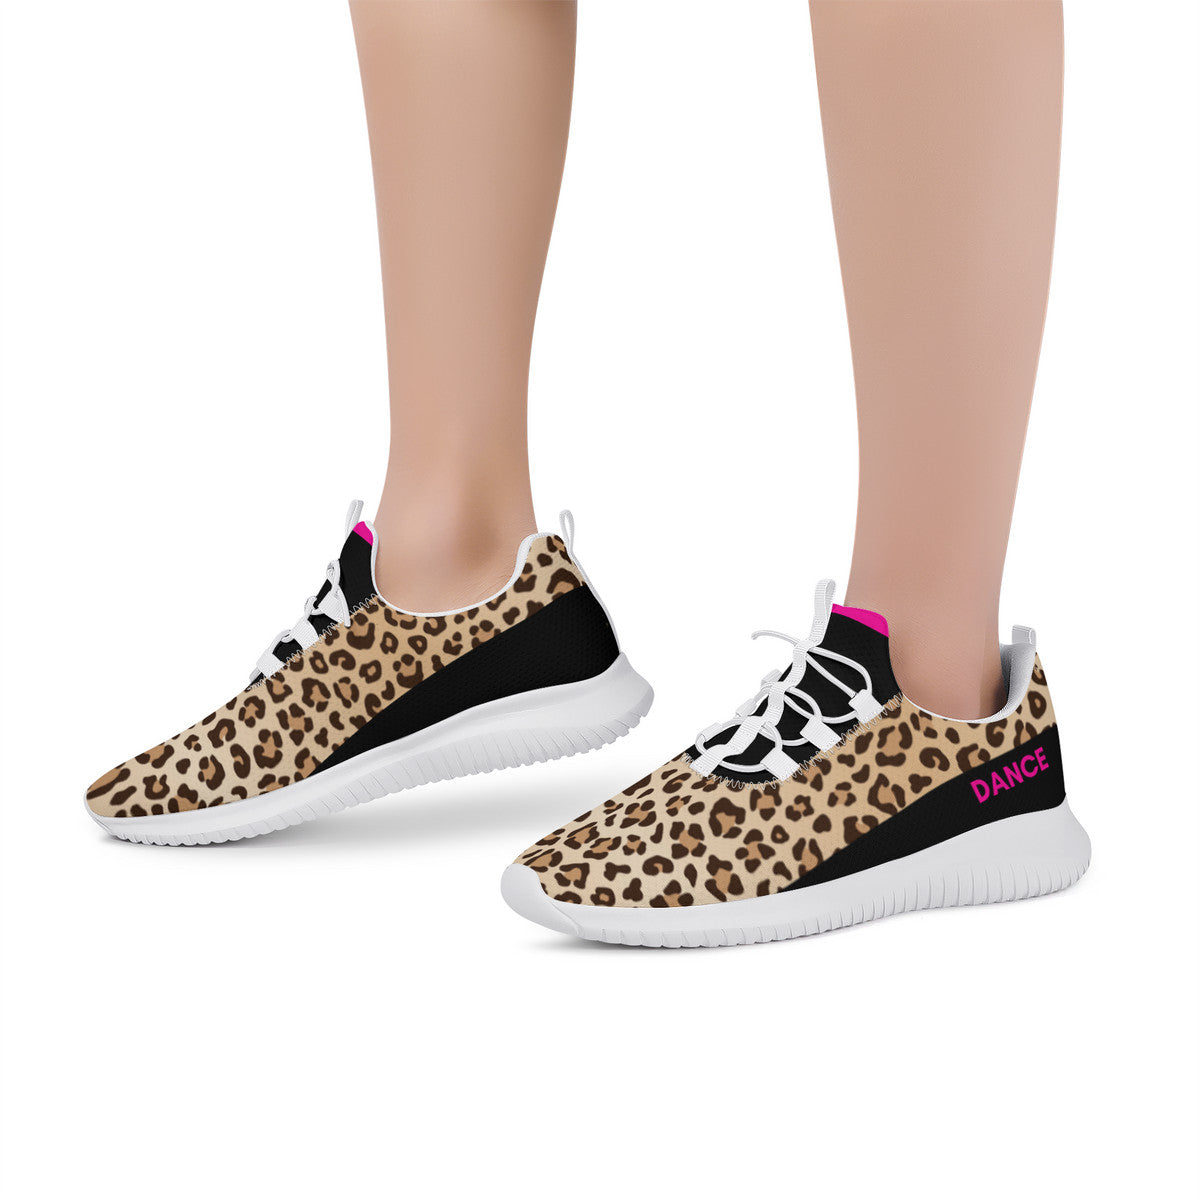 Dance Sneakers - Leopard Print Dance Shoes